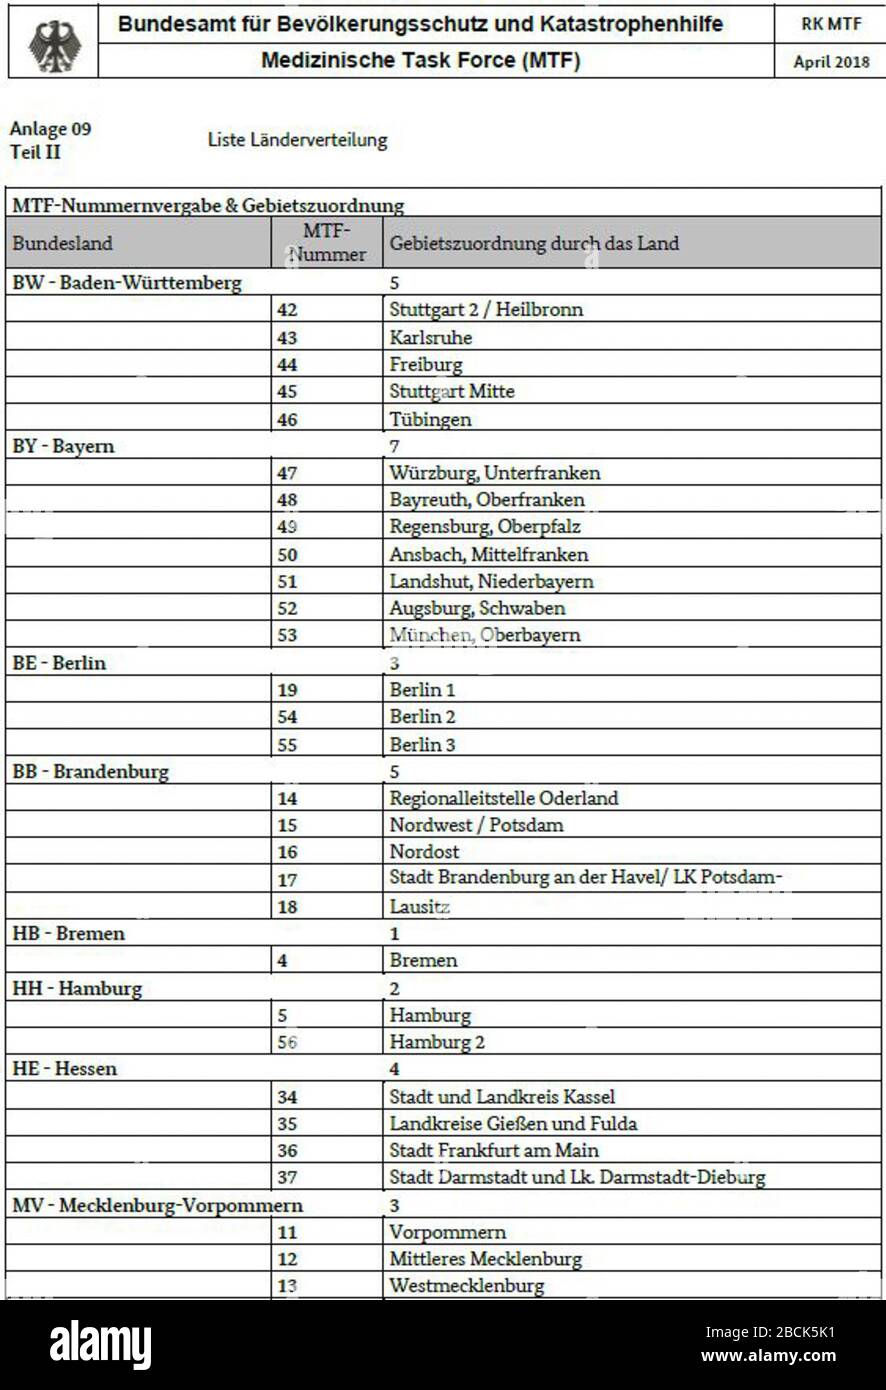 'Deutsch: Medizinische Task Force - Länderstandorte - MTF-Nummern Nummer - Orte1; 1 April 2018; https://www.bbk.bund.de/SharedDocs/Downloads/BBK/DE/Downloads/GesBevS/RK MTF.pdf?  blob=publicationFile; BKK; ' Stock Photo